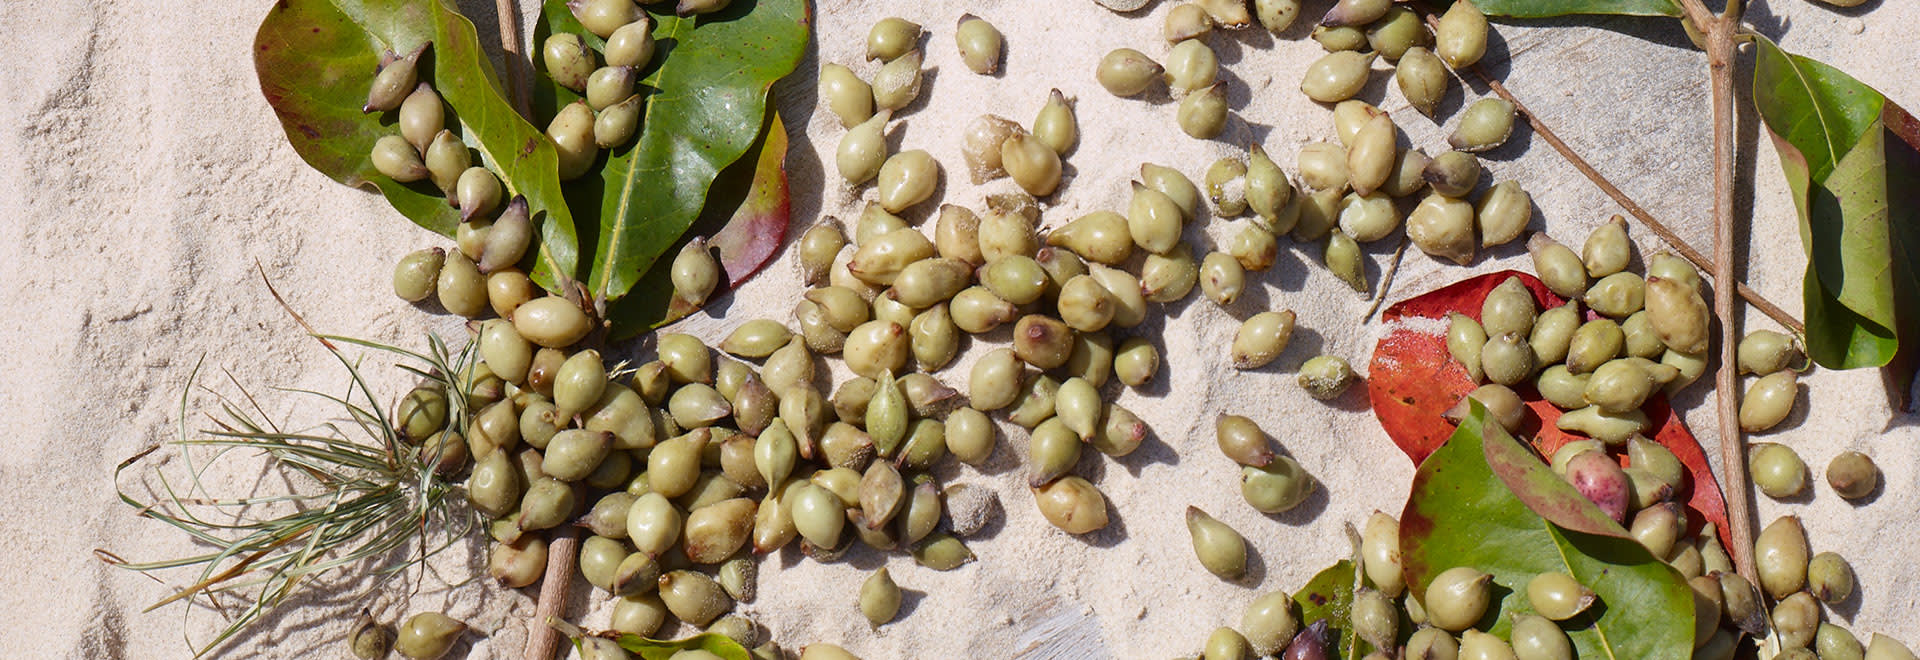 A photo of kakadu plums on the sand 